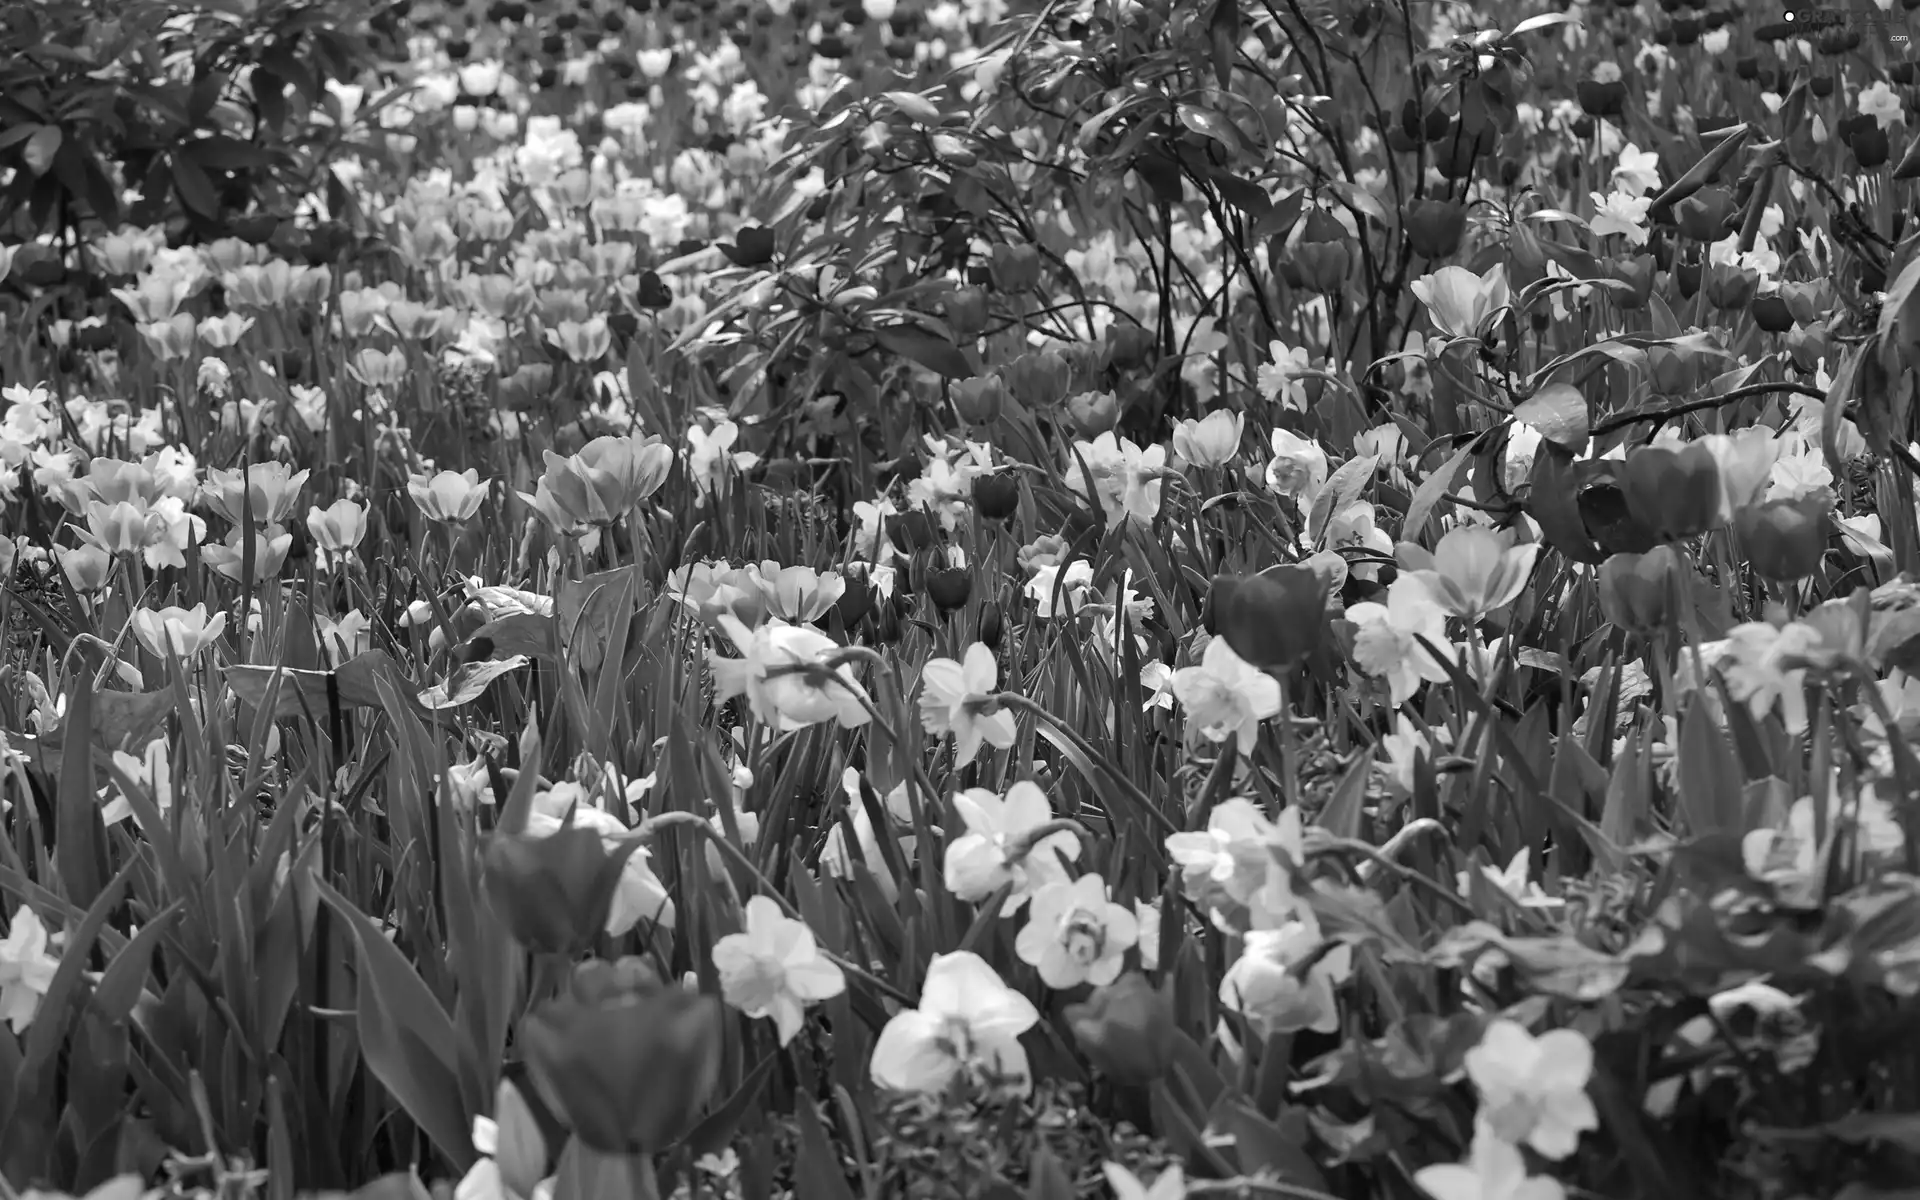 Daffodils, color, Tulips